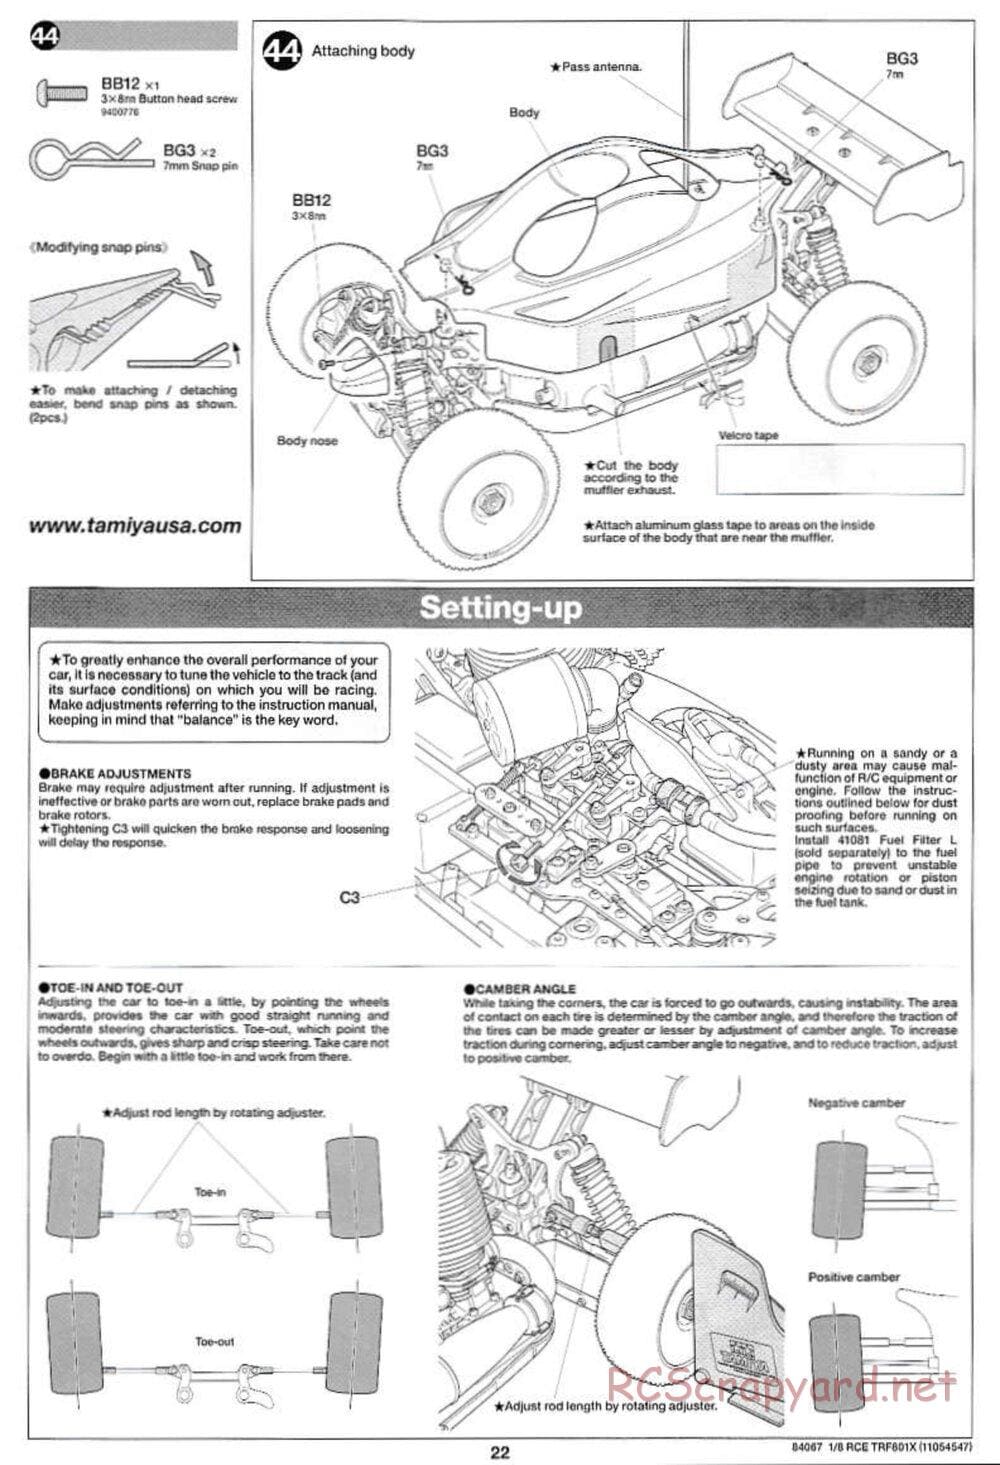 Tamiya - TRF801X Chassis - Manual - Page 22